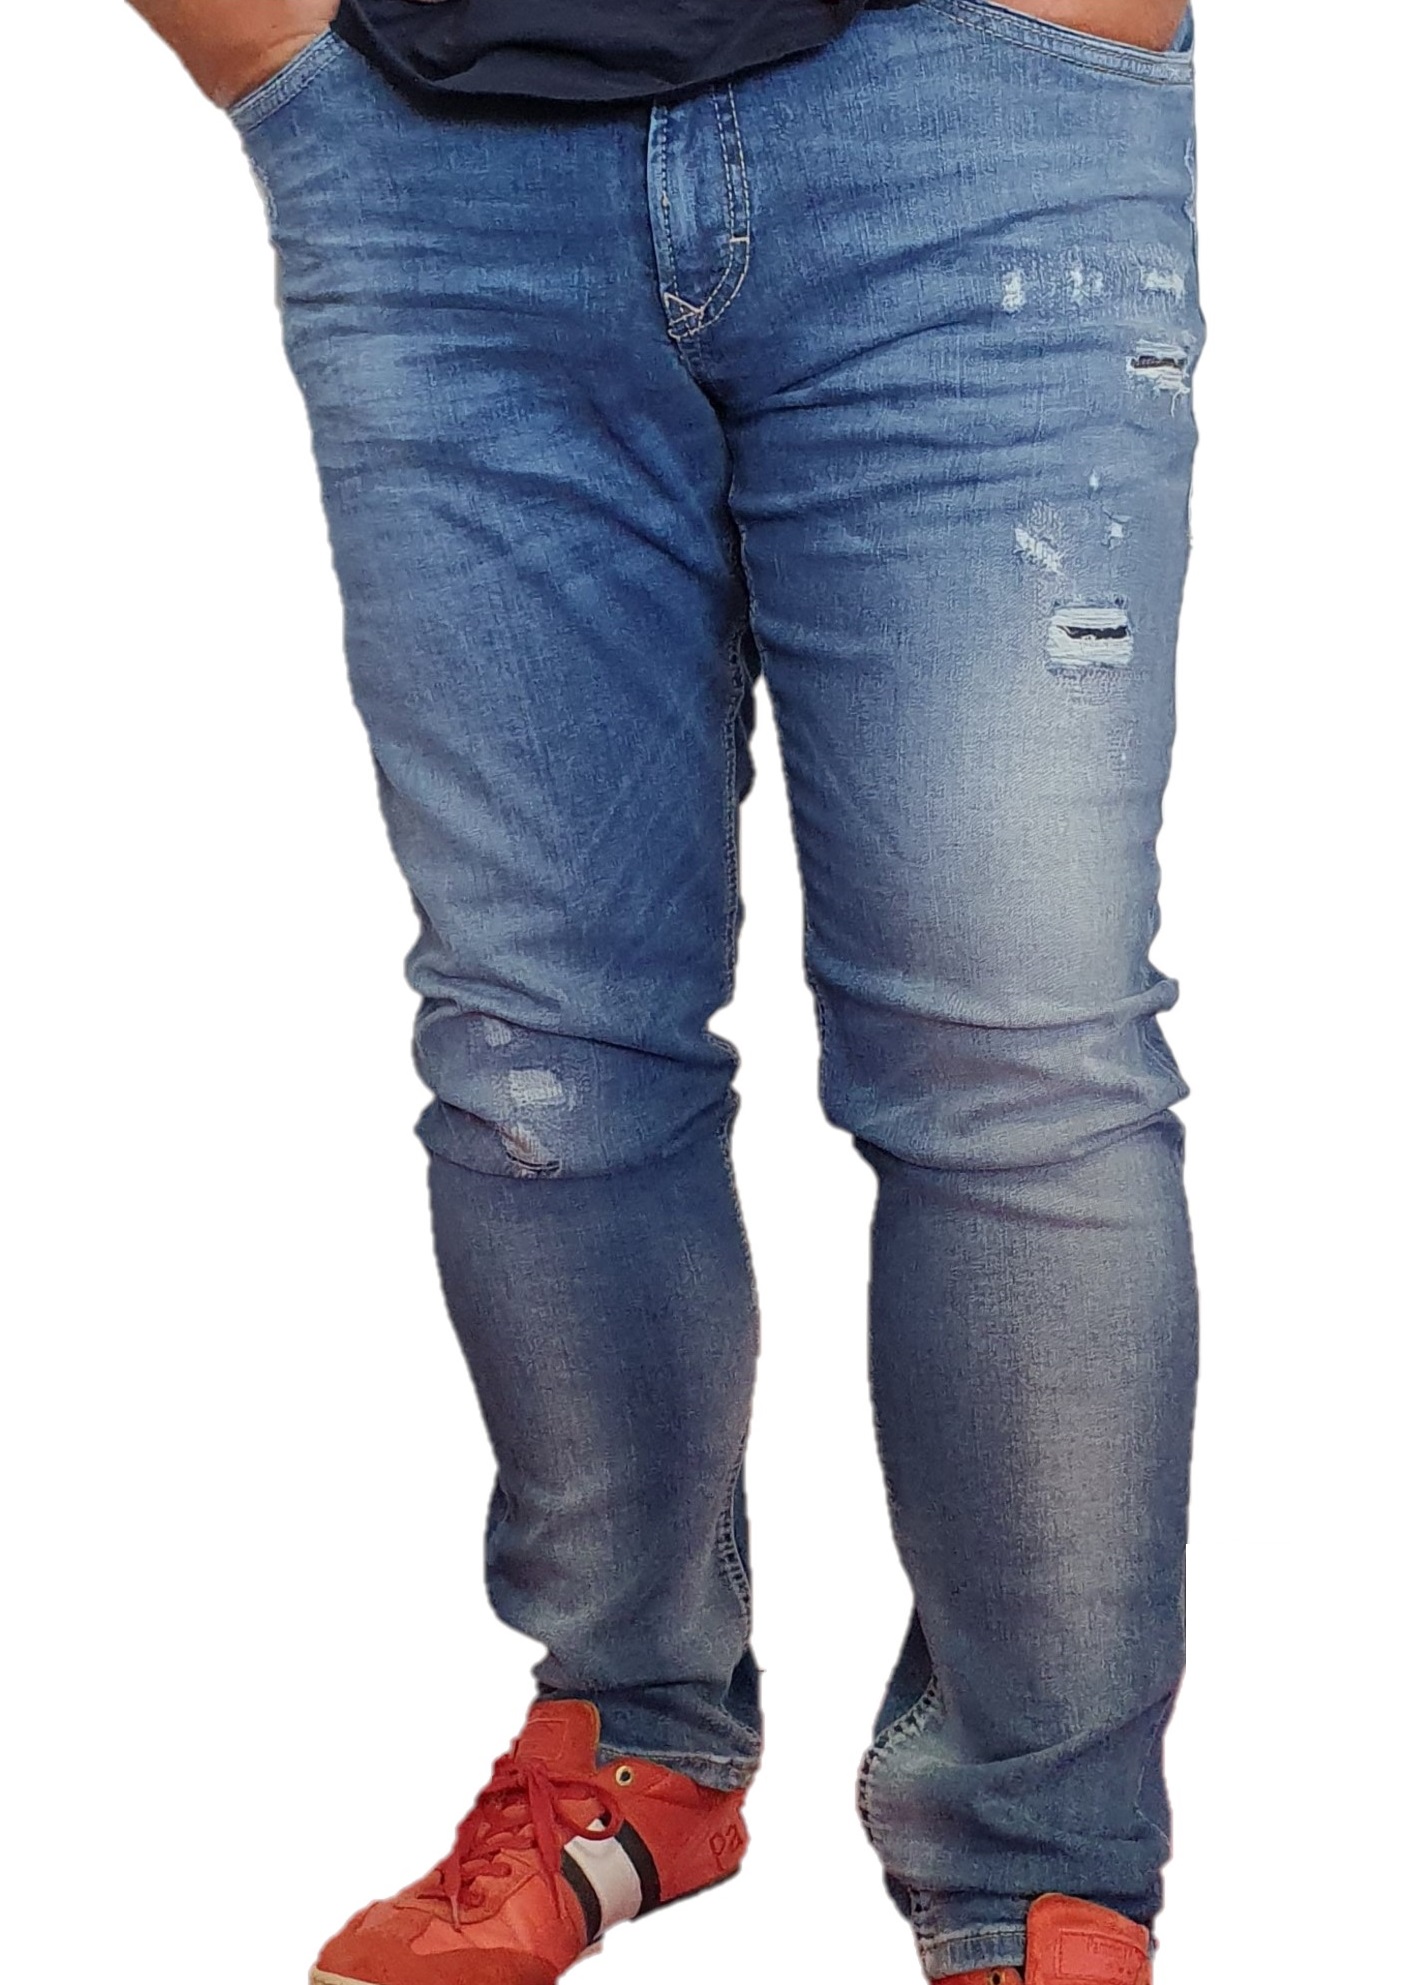 Jeans, GioMilano Herren-Jeans, Pipe, | Arne MAC Jeans Drivers kernige authentische 5-Pocket